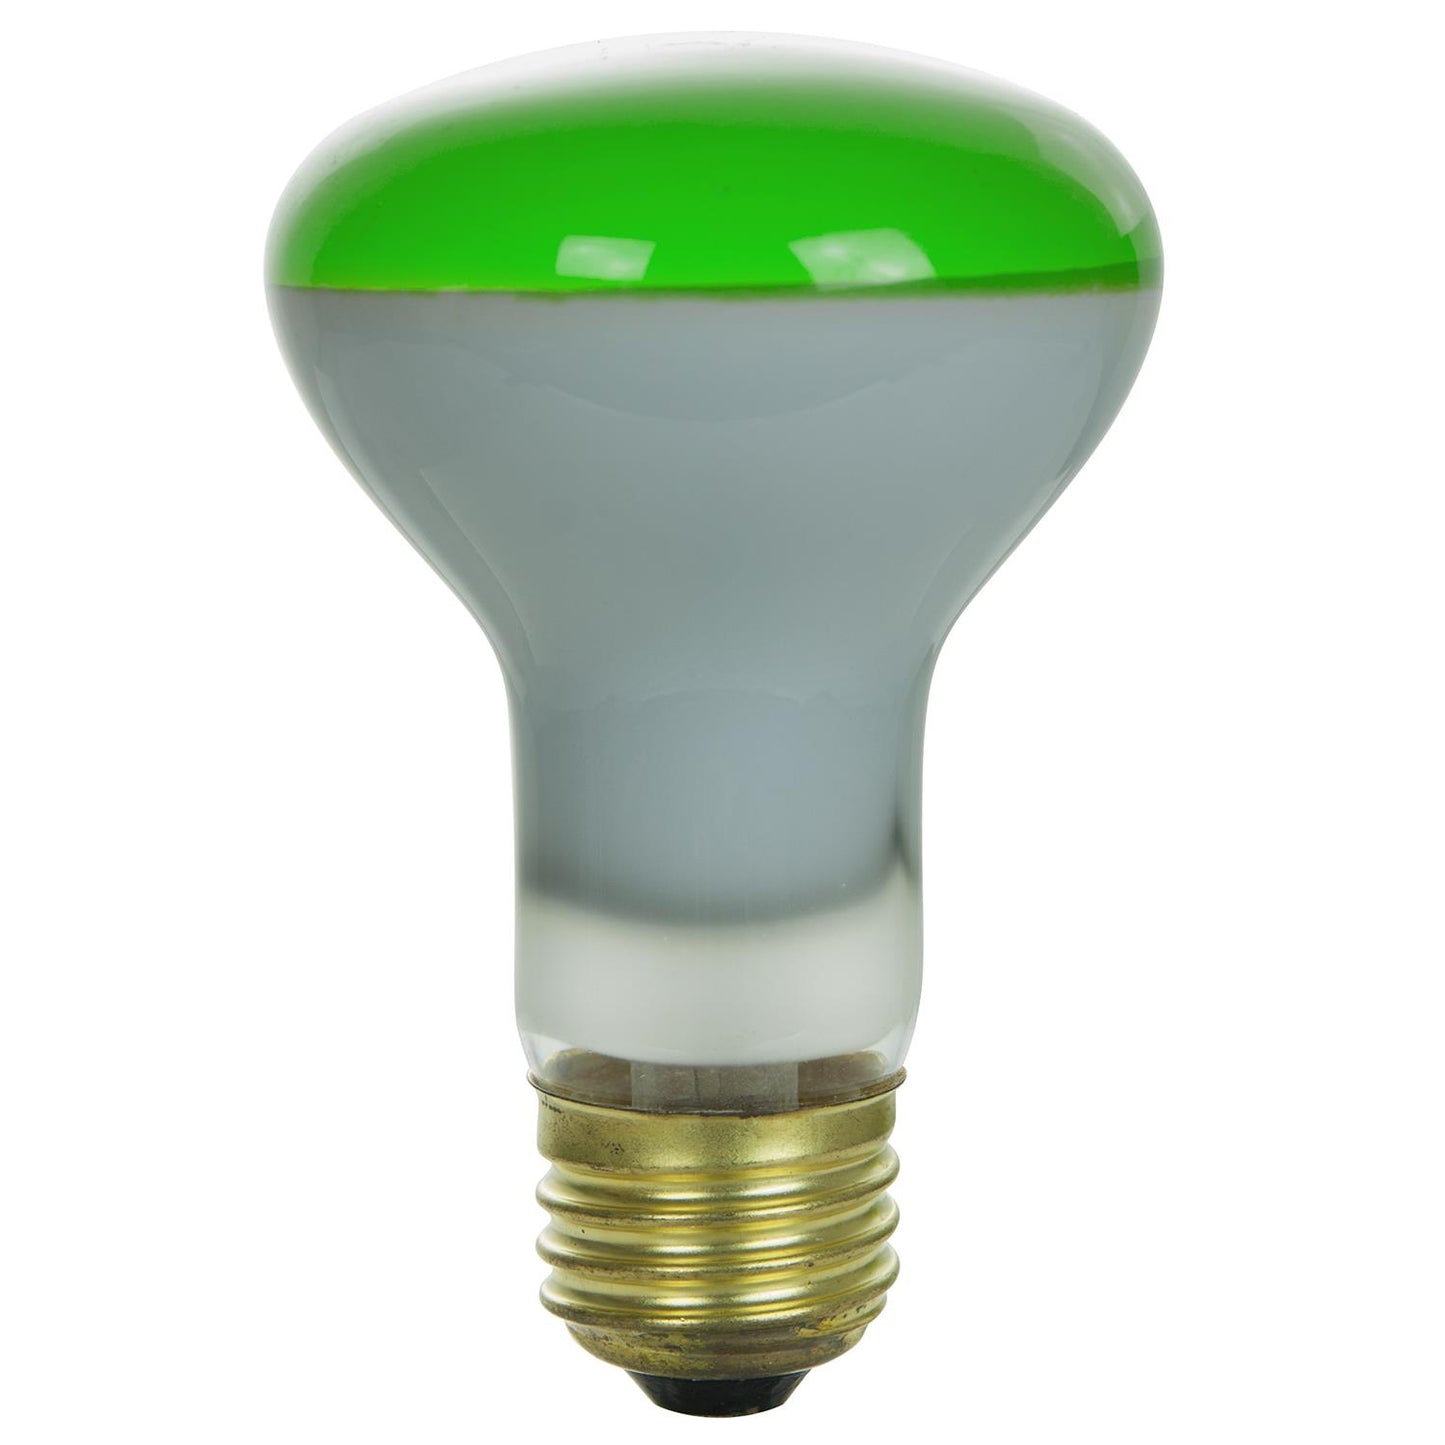 Sunlite 50 Watt R20 Colored Reflector, Medium Base, Green